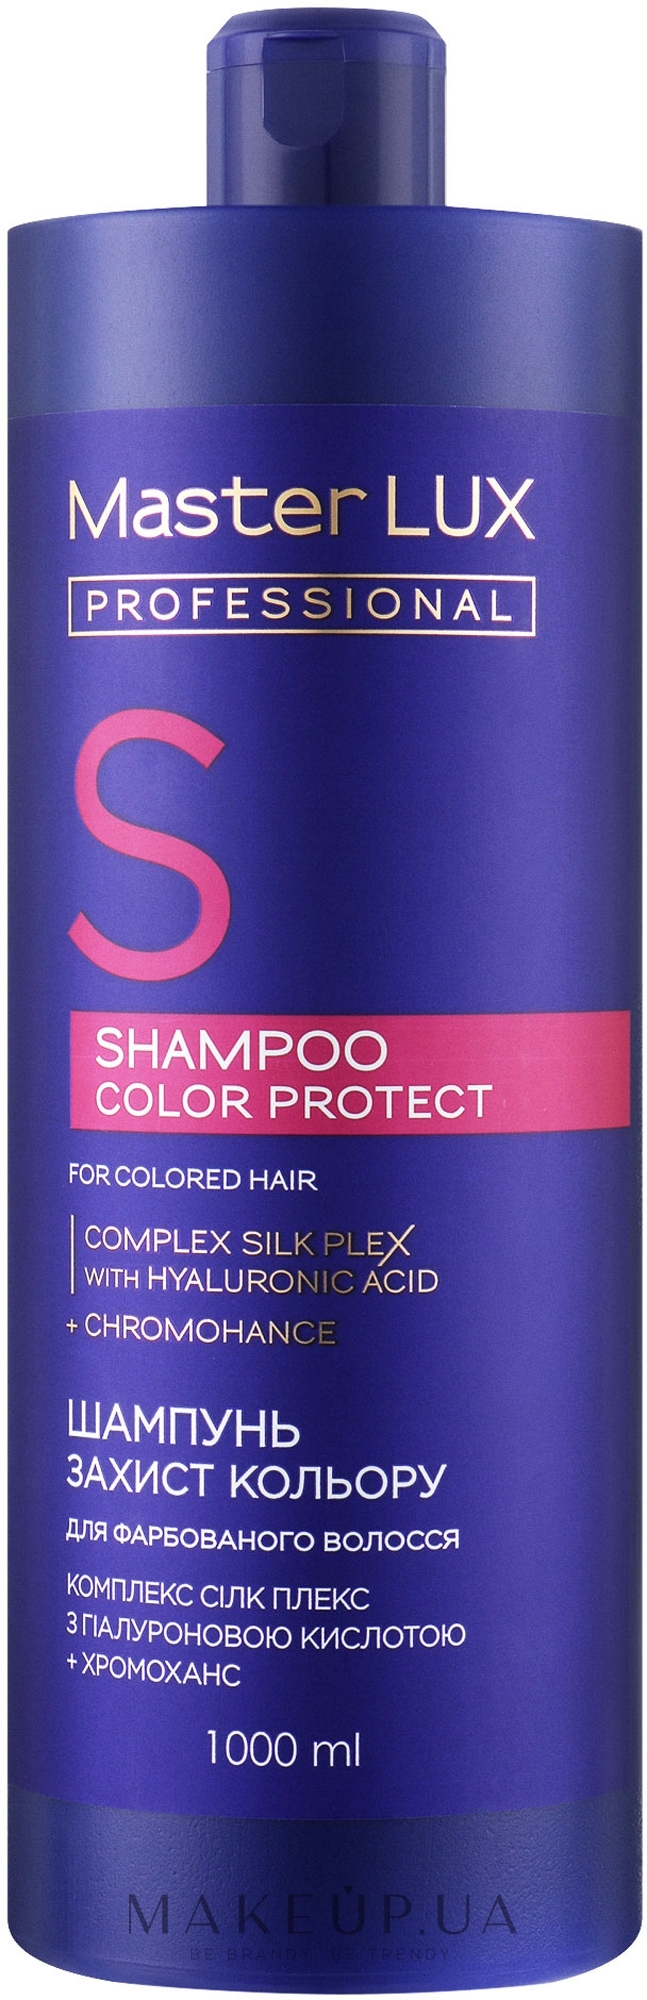 Шампунь для фарбованого волосся "Захист кольору" - Master LUX Professional Color Protect Shampoo — фото 1000ml